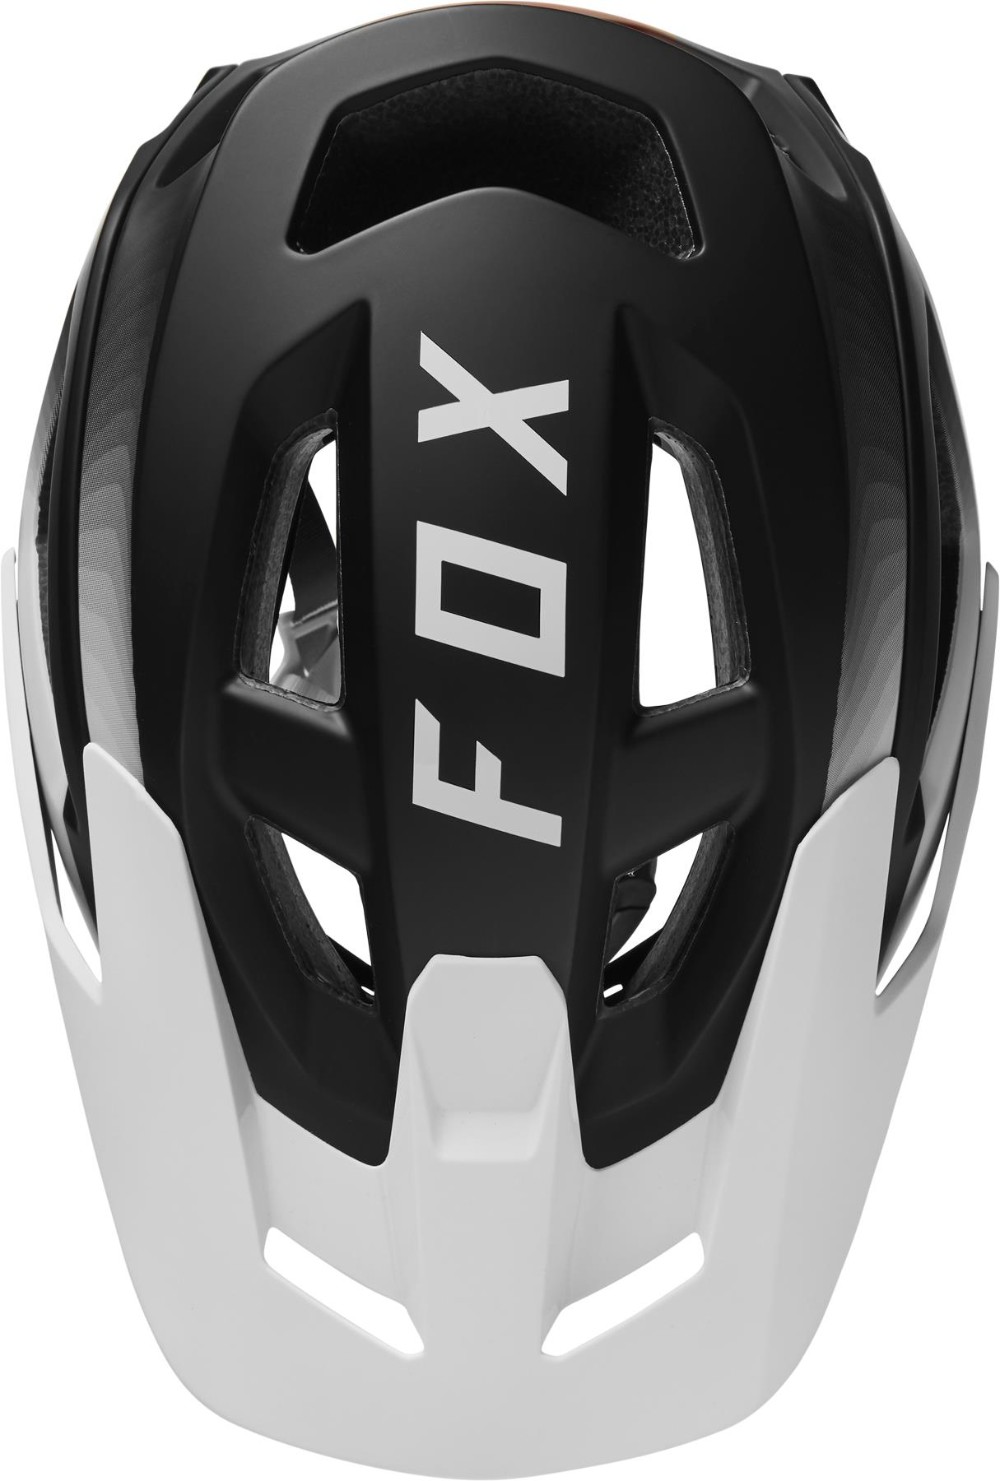 Speedframe Pro Fade MTB Cycling Helmet image 2